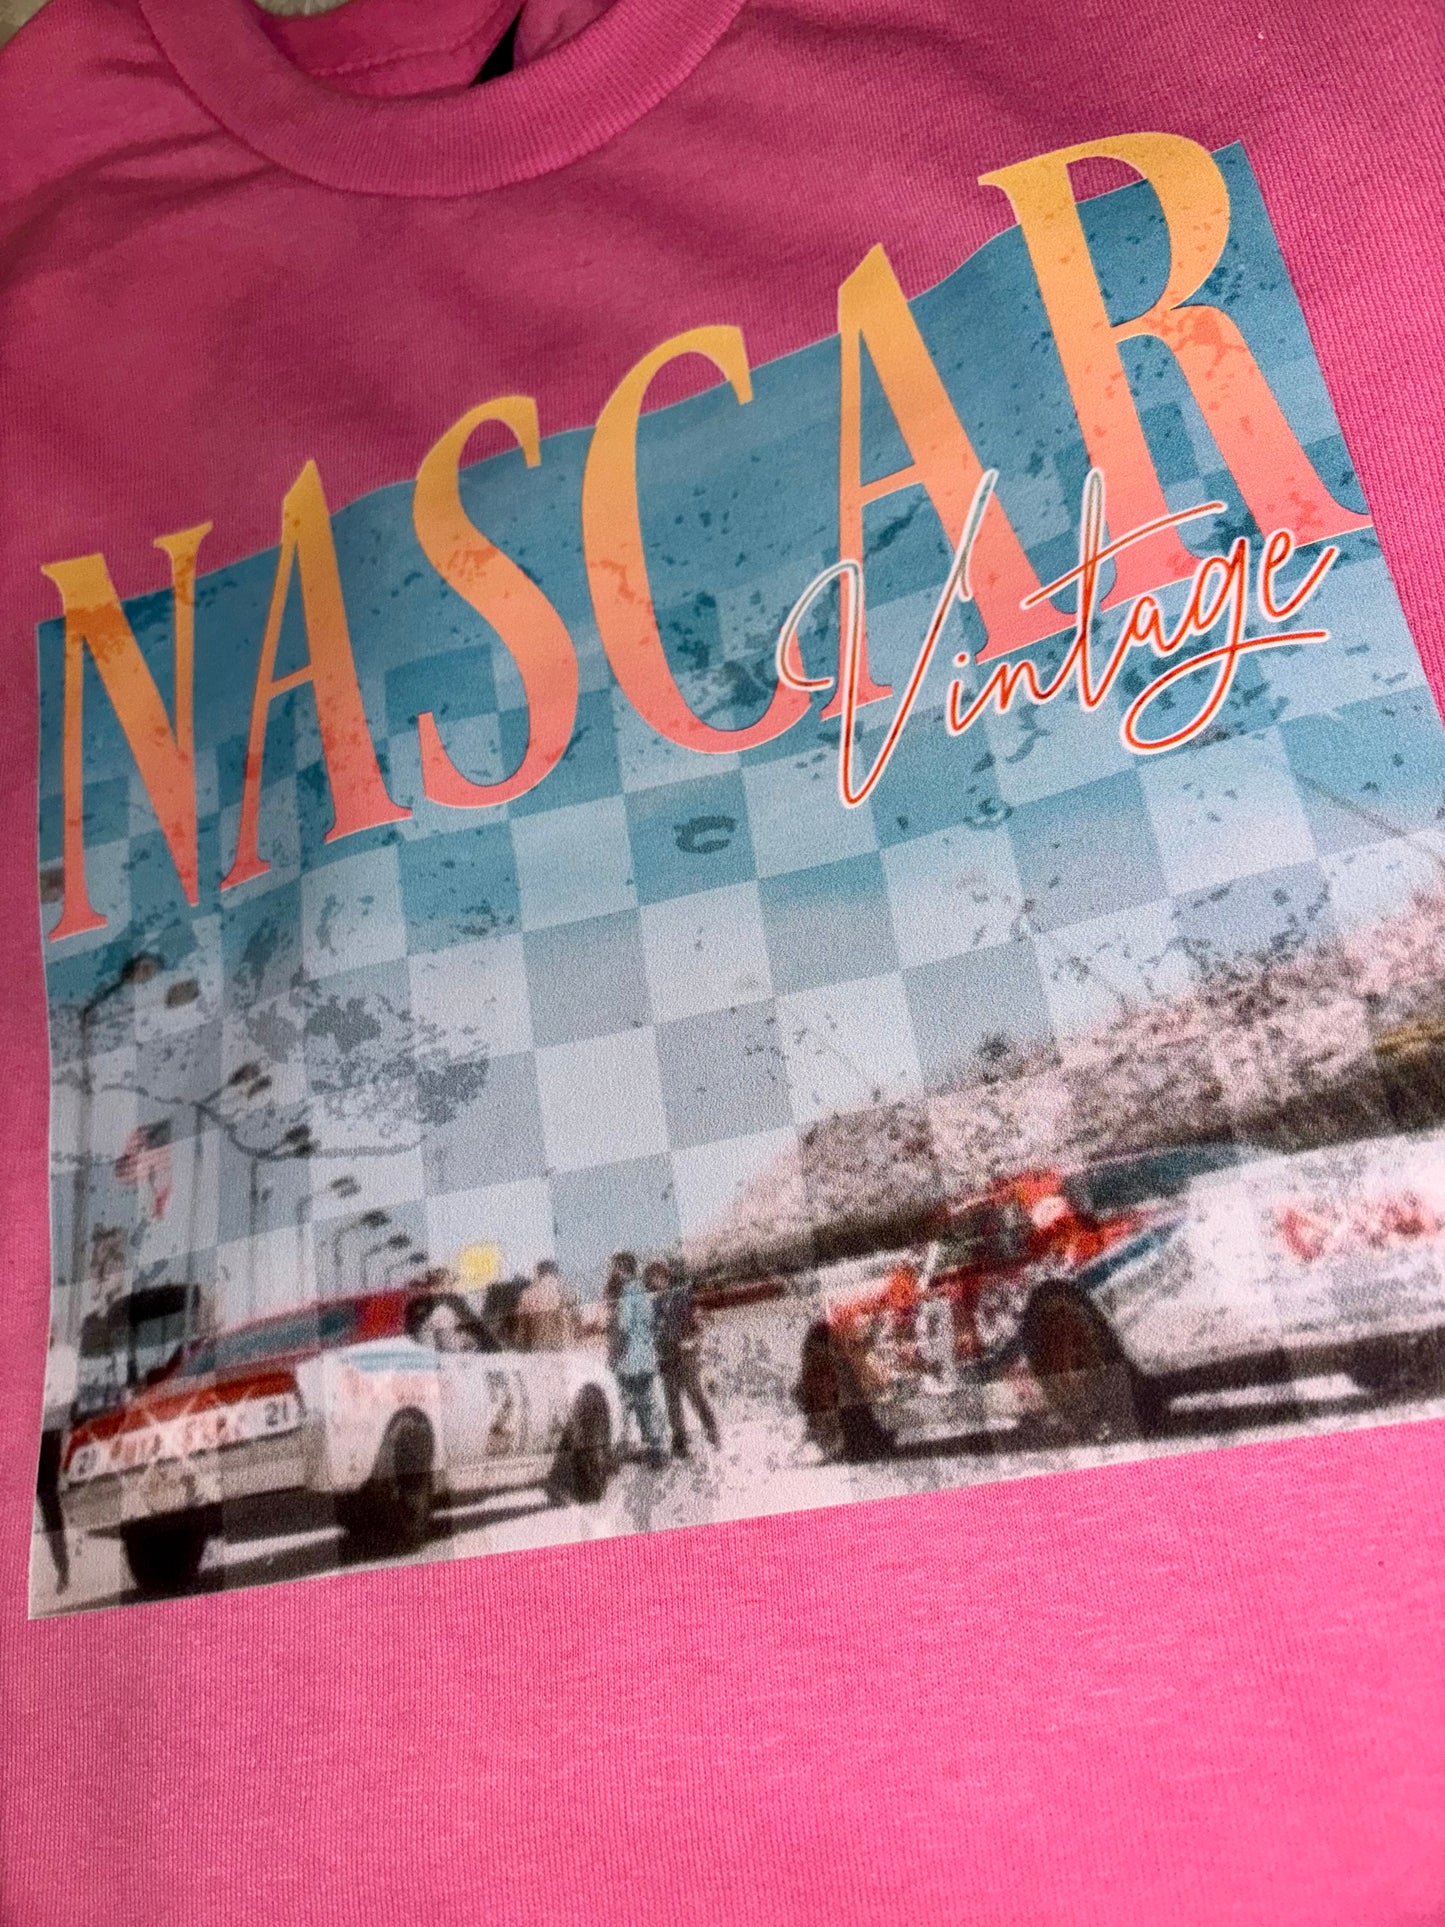 NASCAR vintage tee